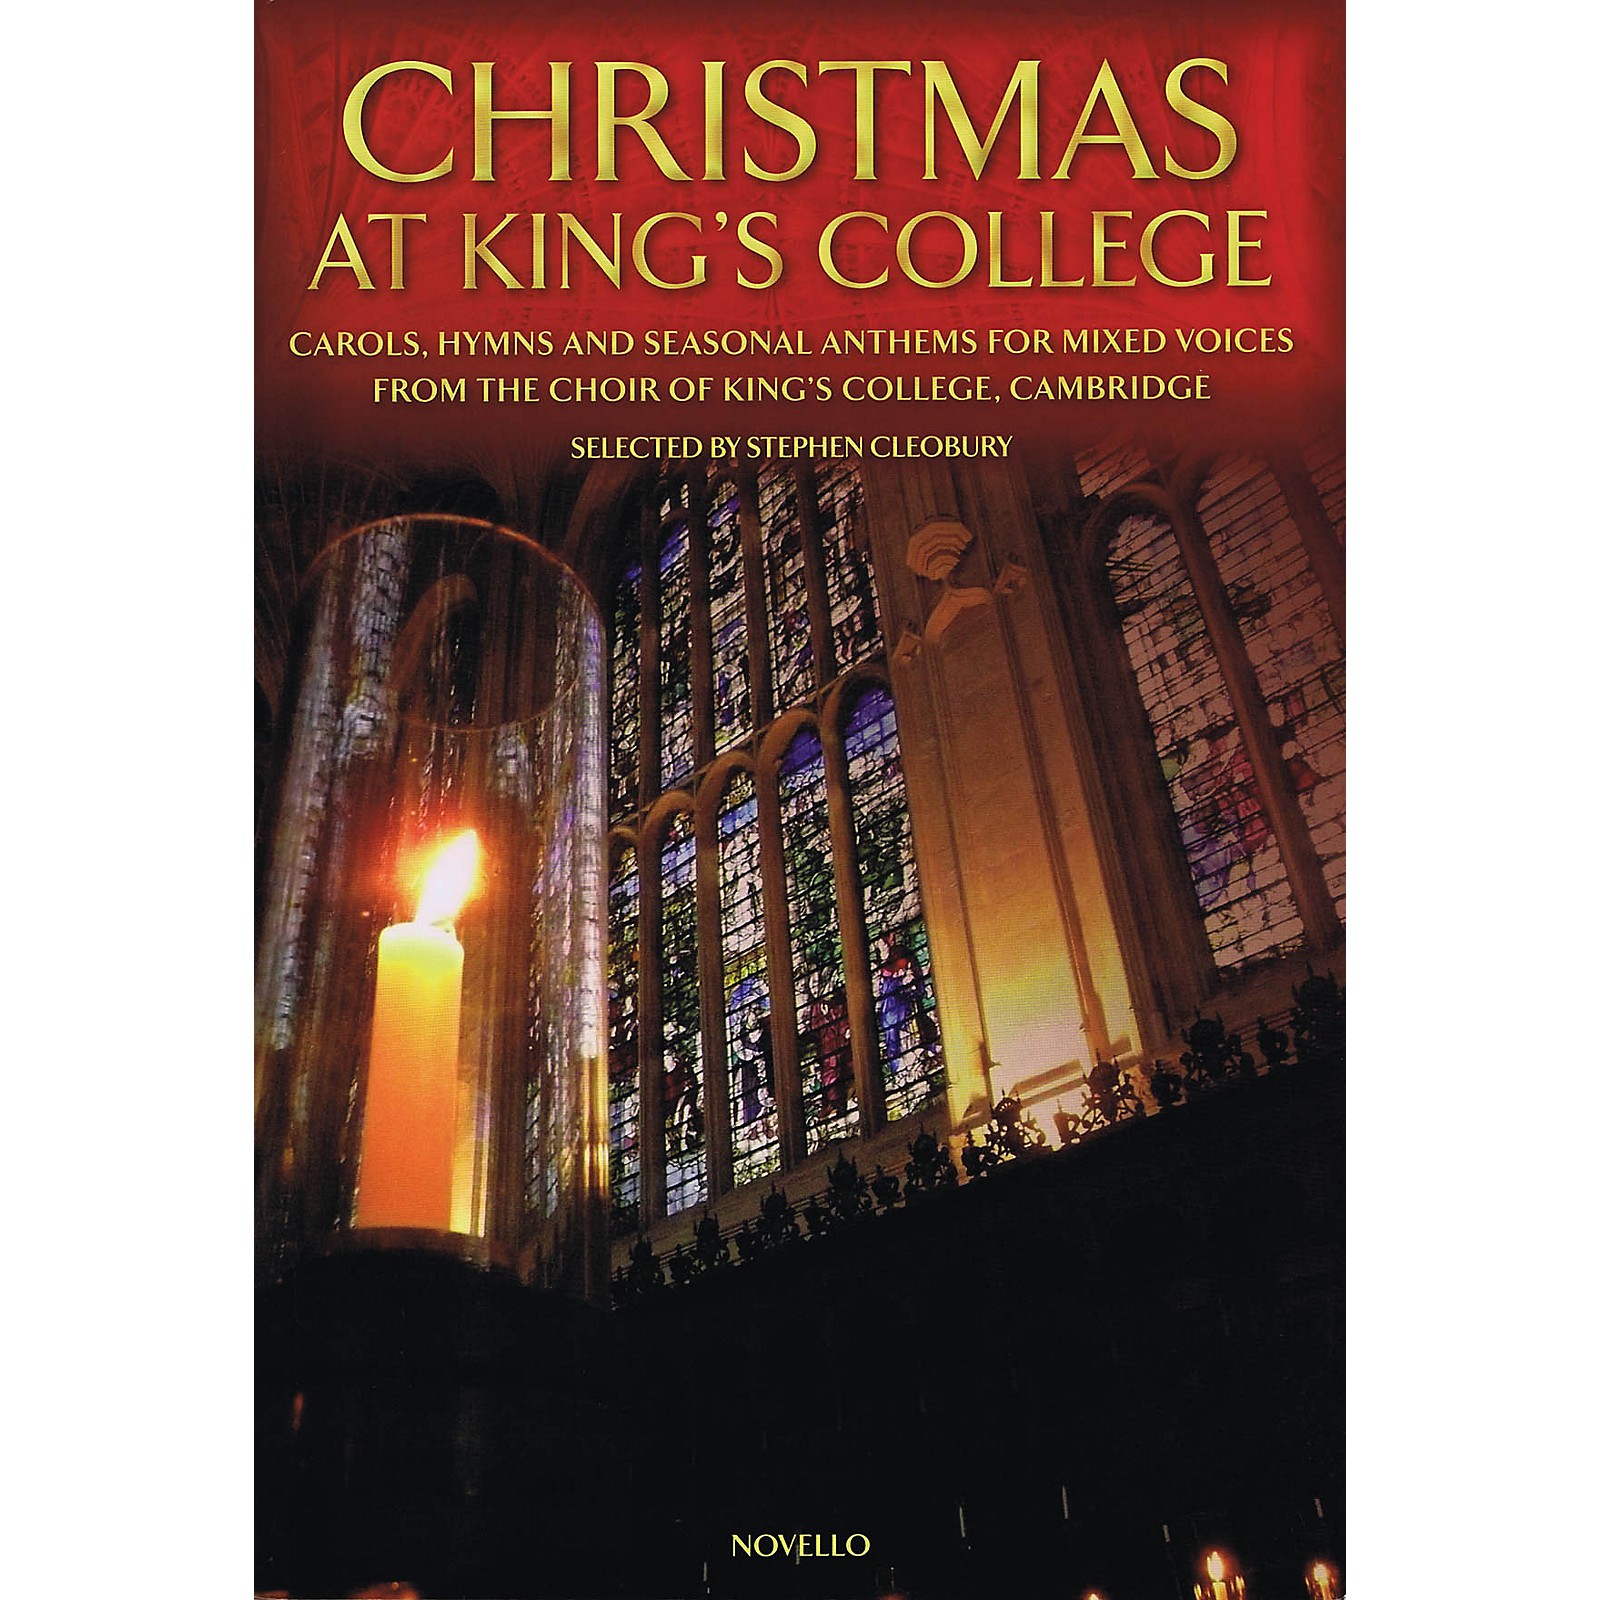 Novello Christmas at King's College (Carols, Hymns and Seasonal Anthems